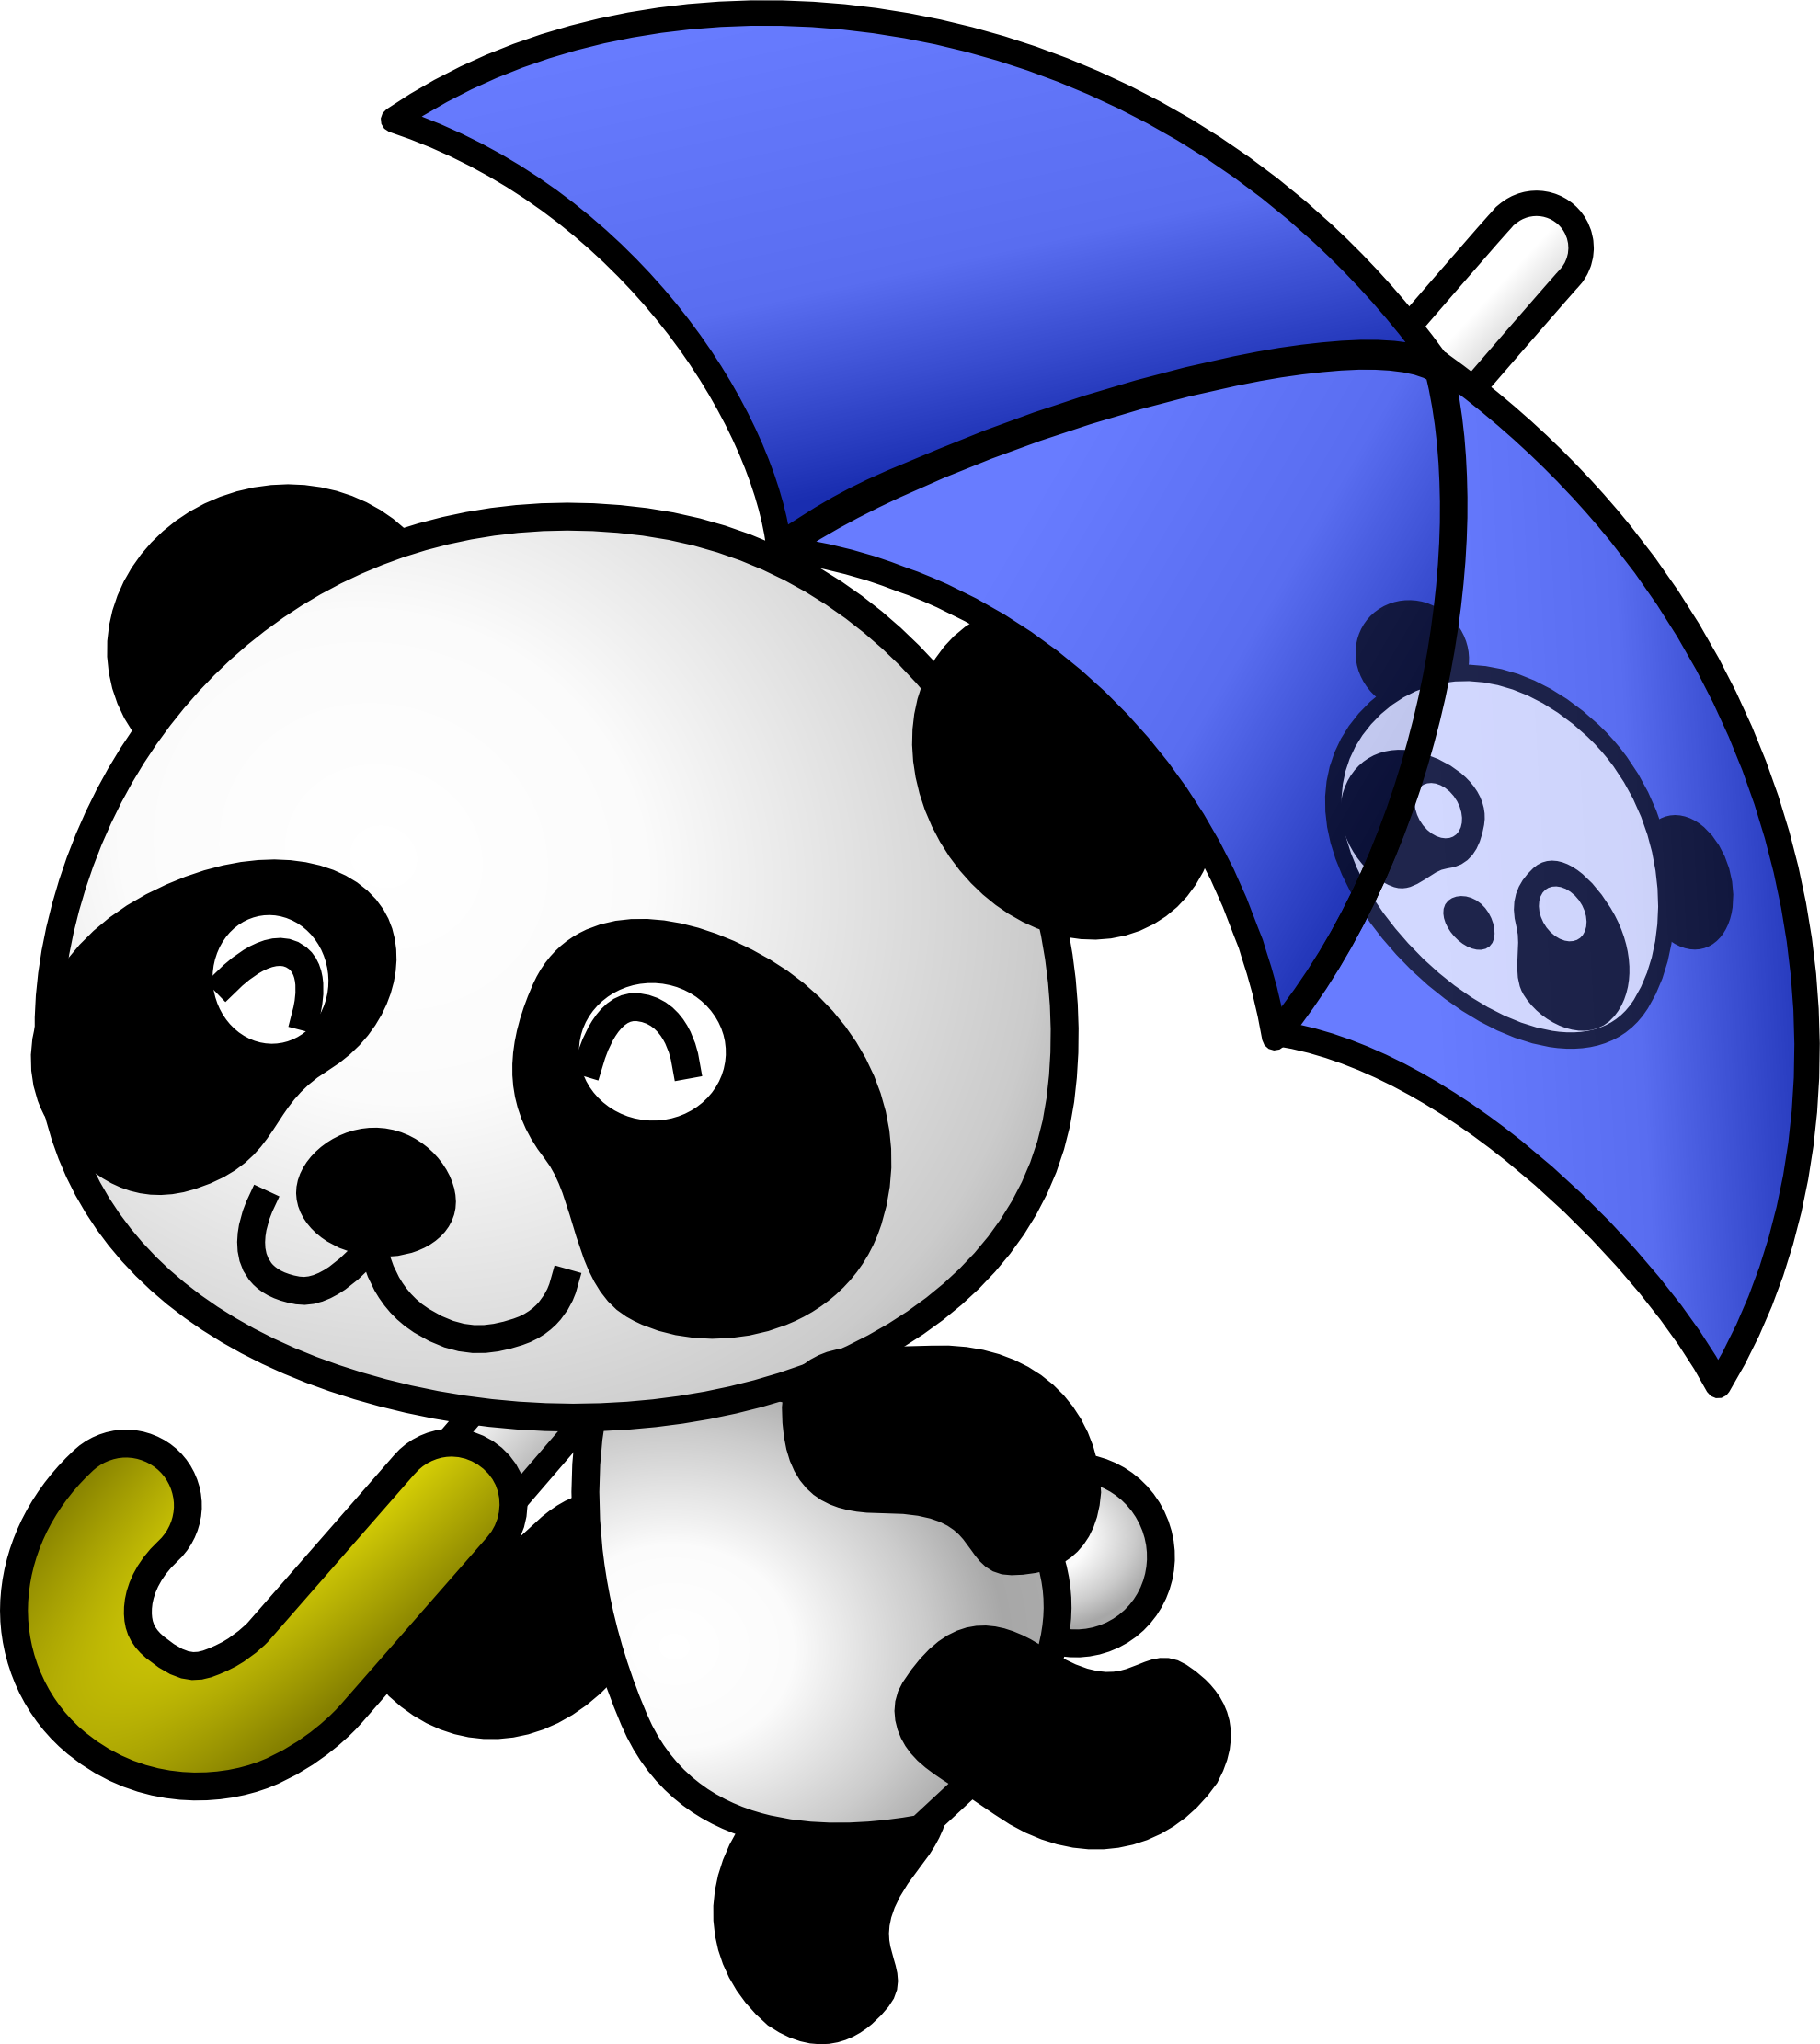 Panda free images pandaclipart. Clipart umbrella gambar